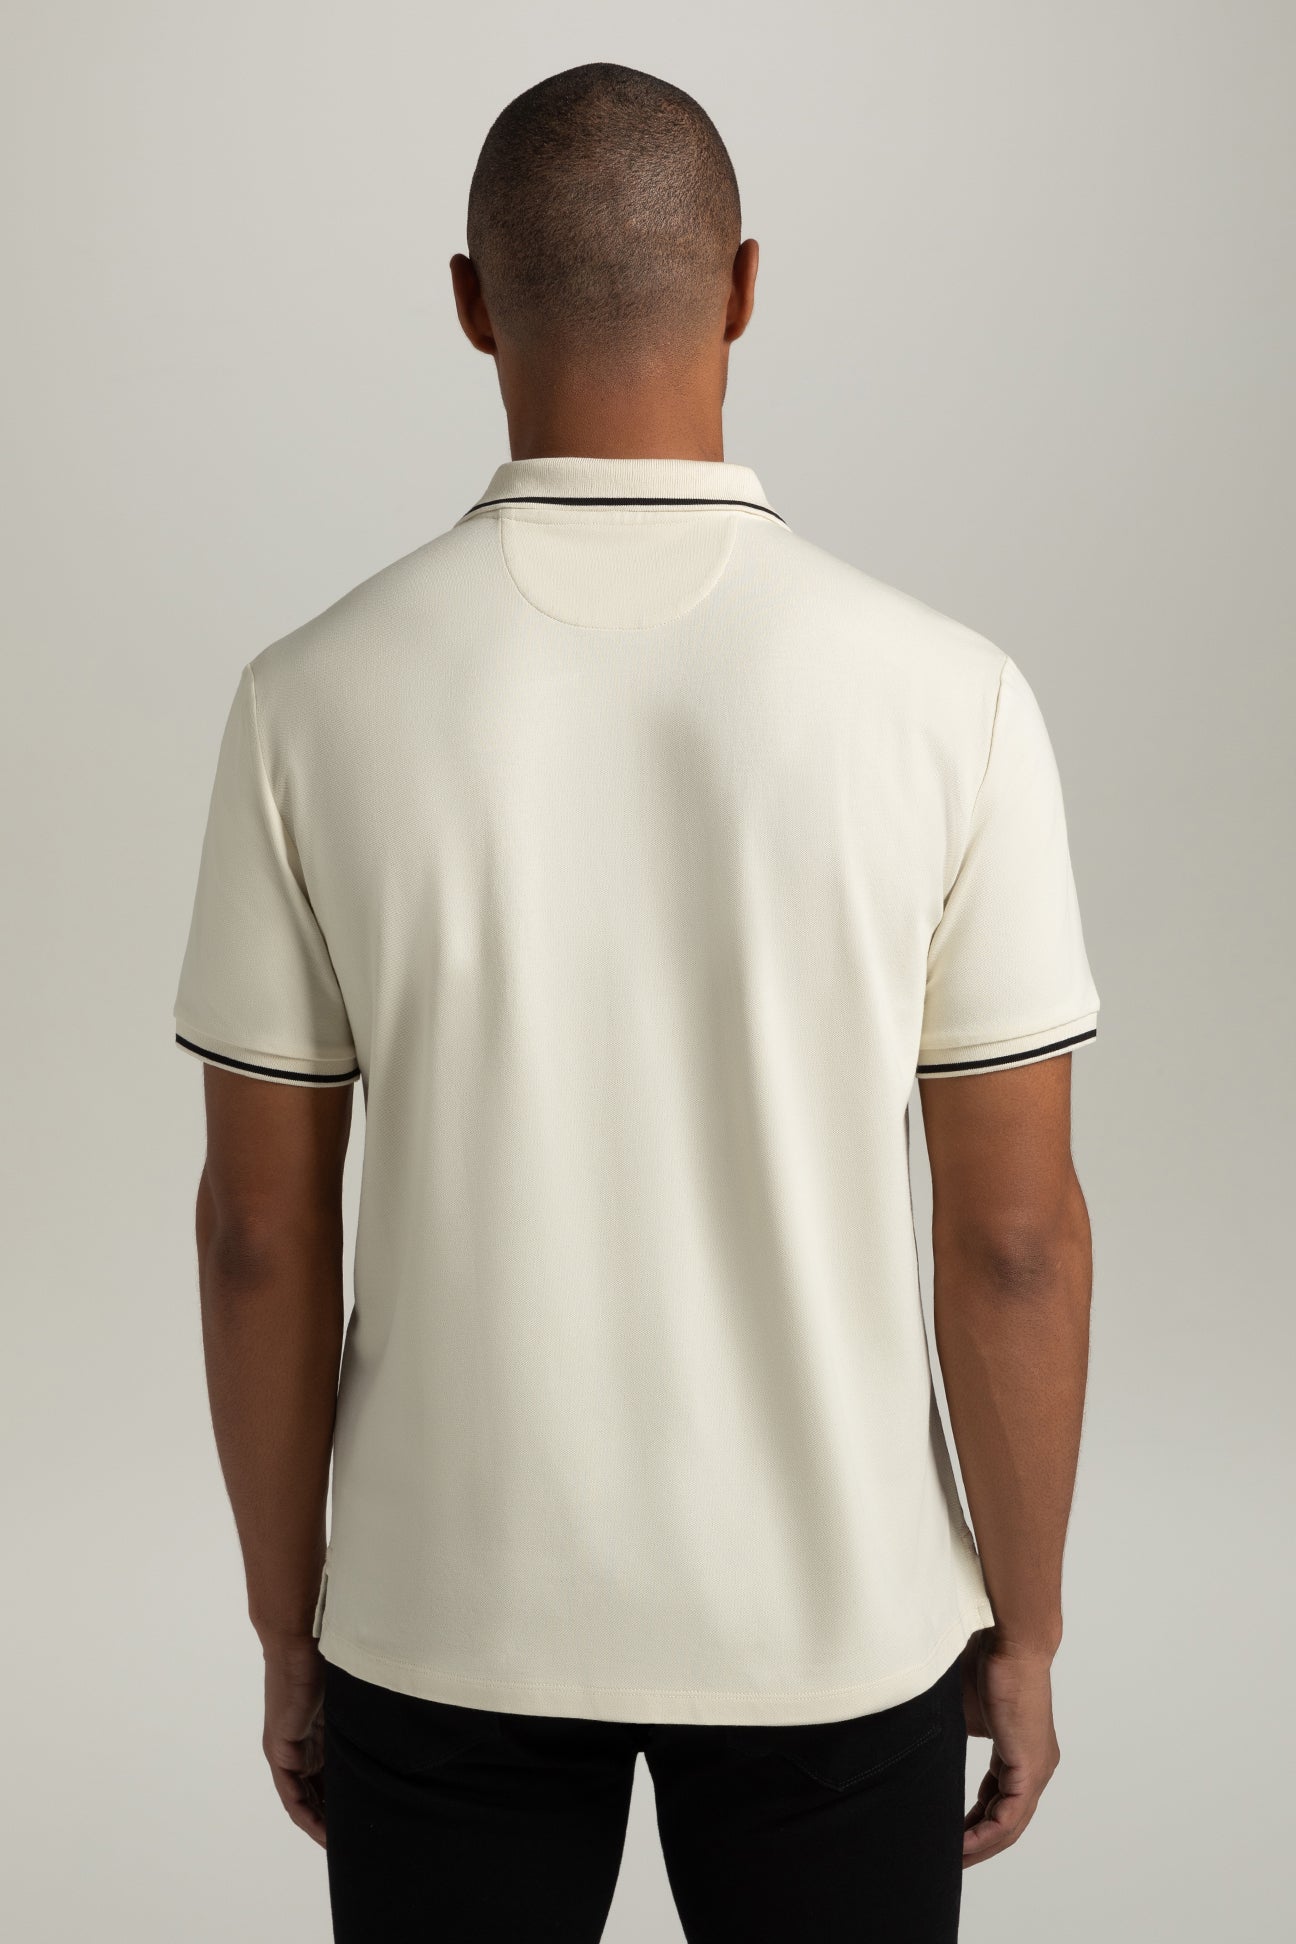 Dior premium polo shirt hot 2023 polo shirt for men in 2023